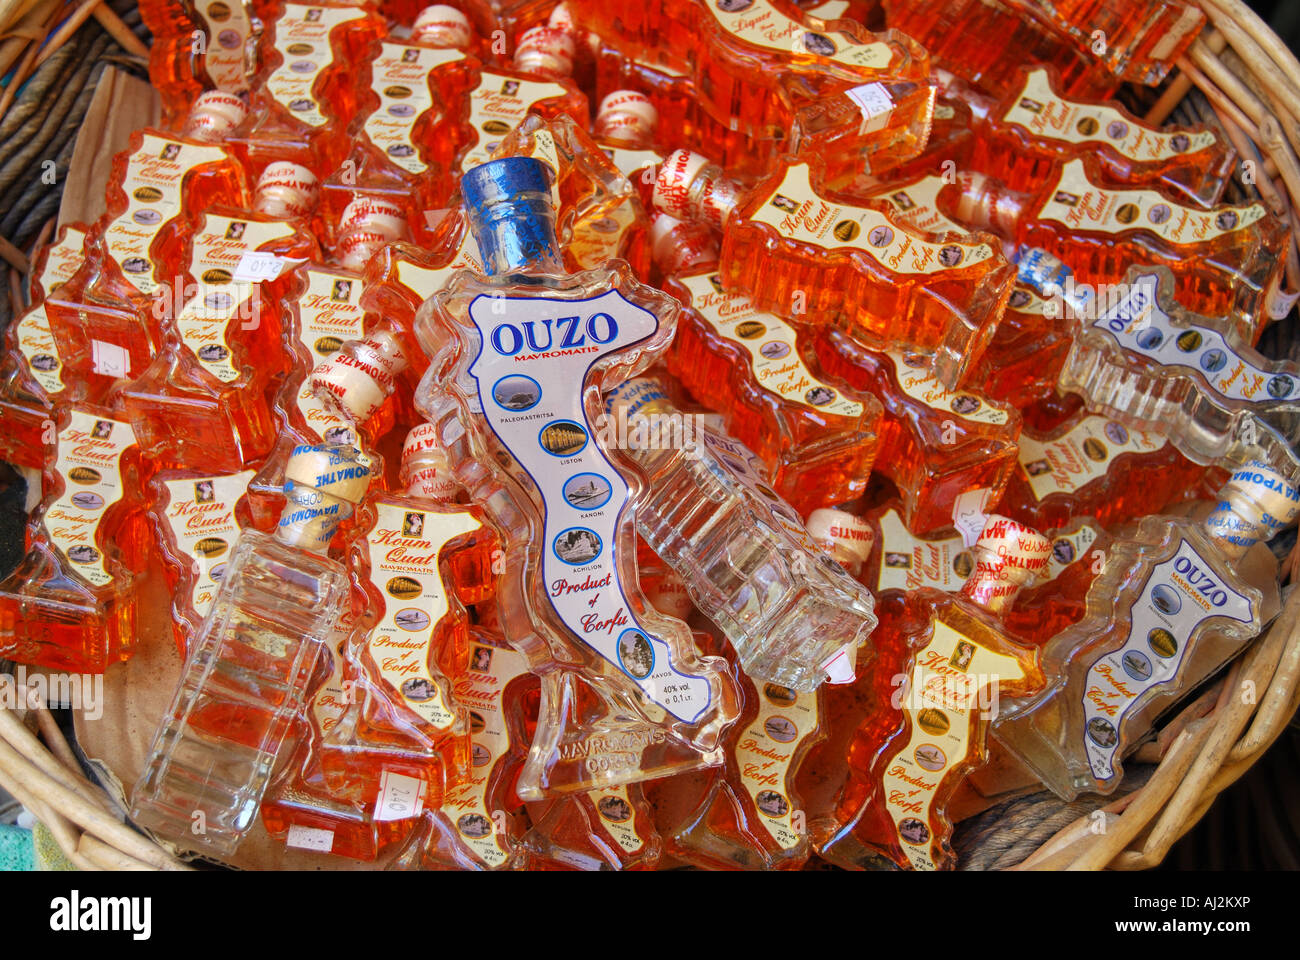 Kumquat Liquer and Ouzo souvenir bottles, Corfu Old Town, Kerkyra, Corfu, Ionian Islands, Greece Stock Photo